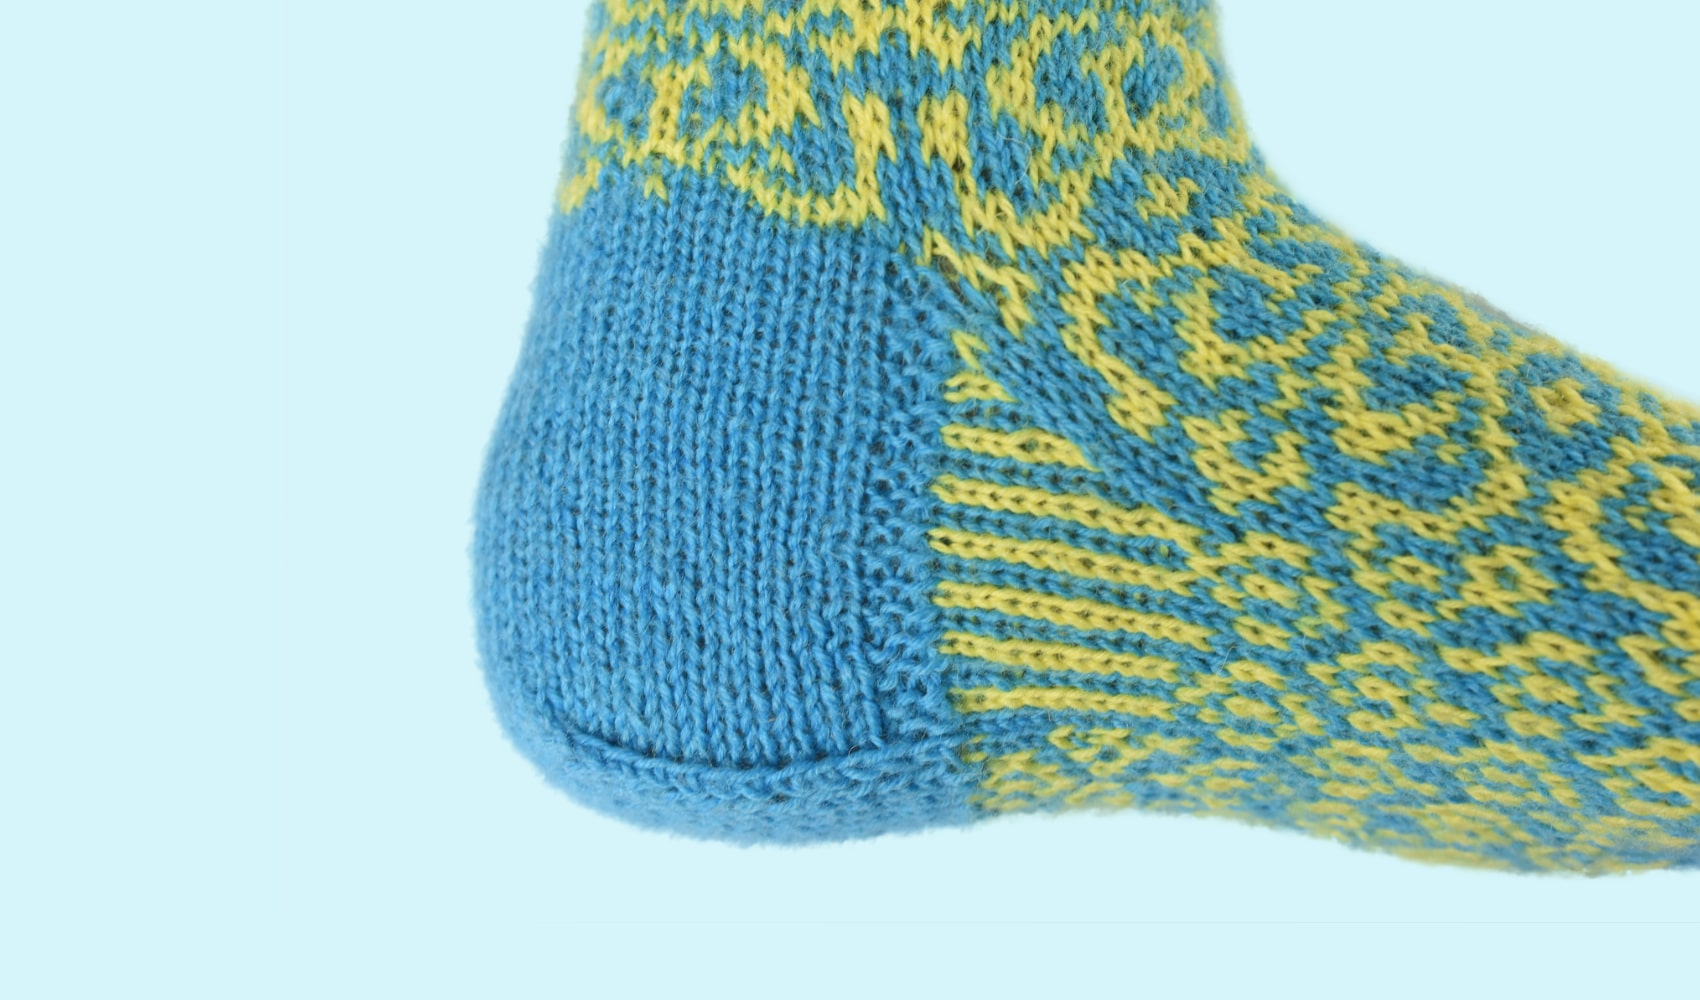 Sock knitting heel cap heel knitting,sock chart cap heel,reinforced cap heel knitting,tutorial cap heel